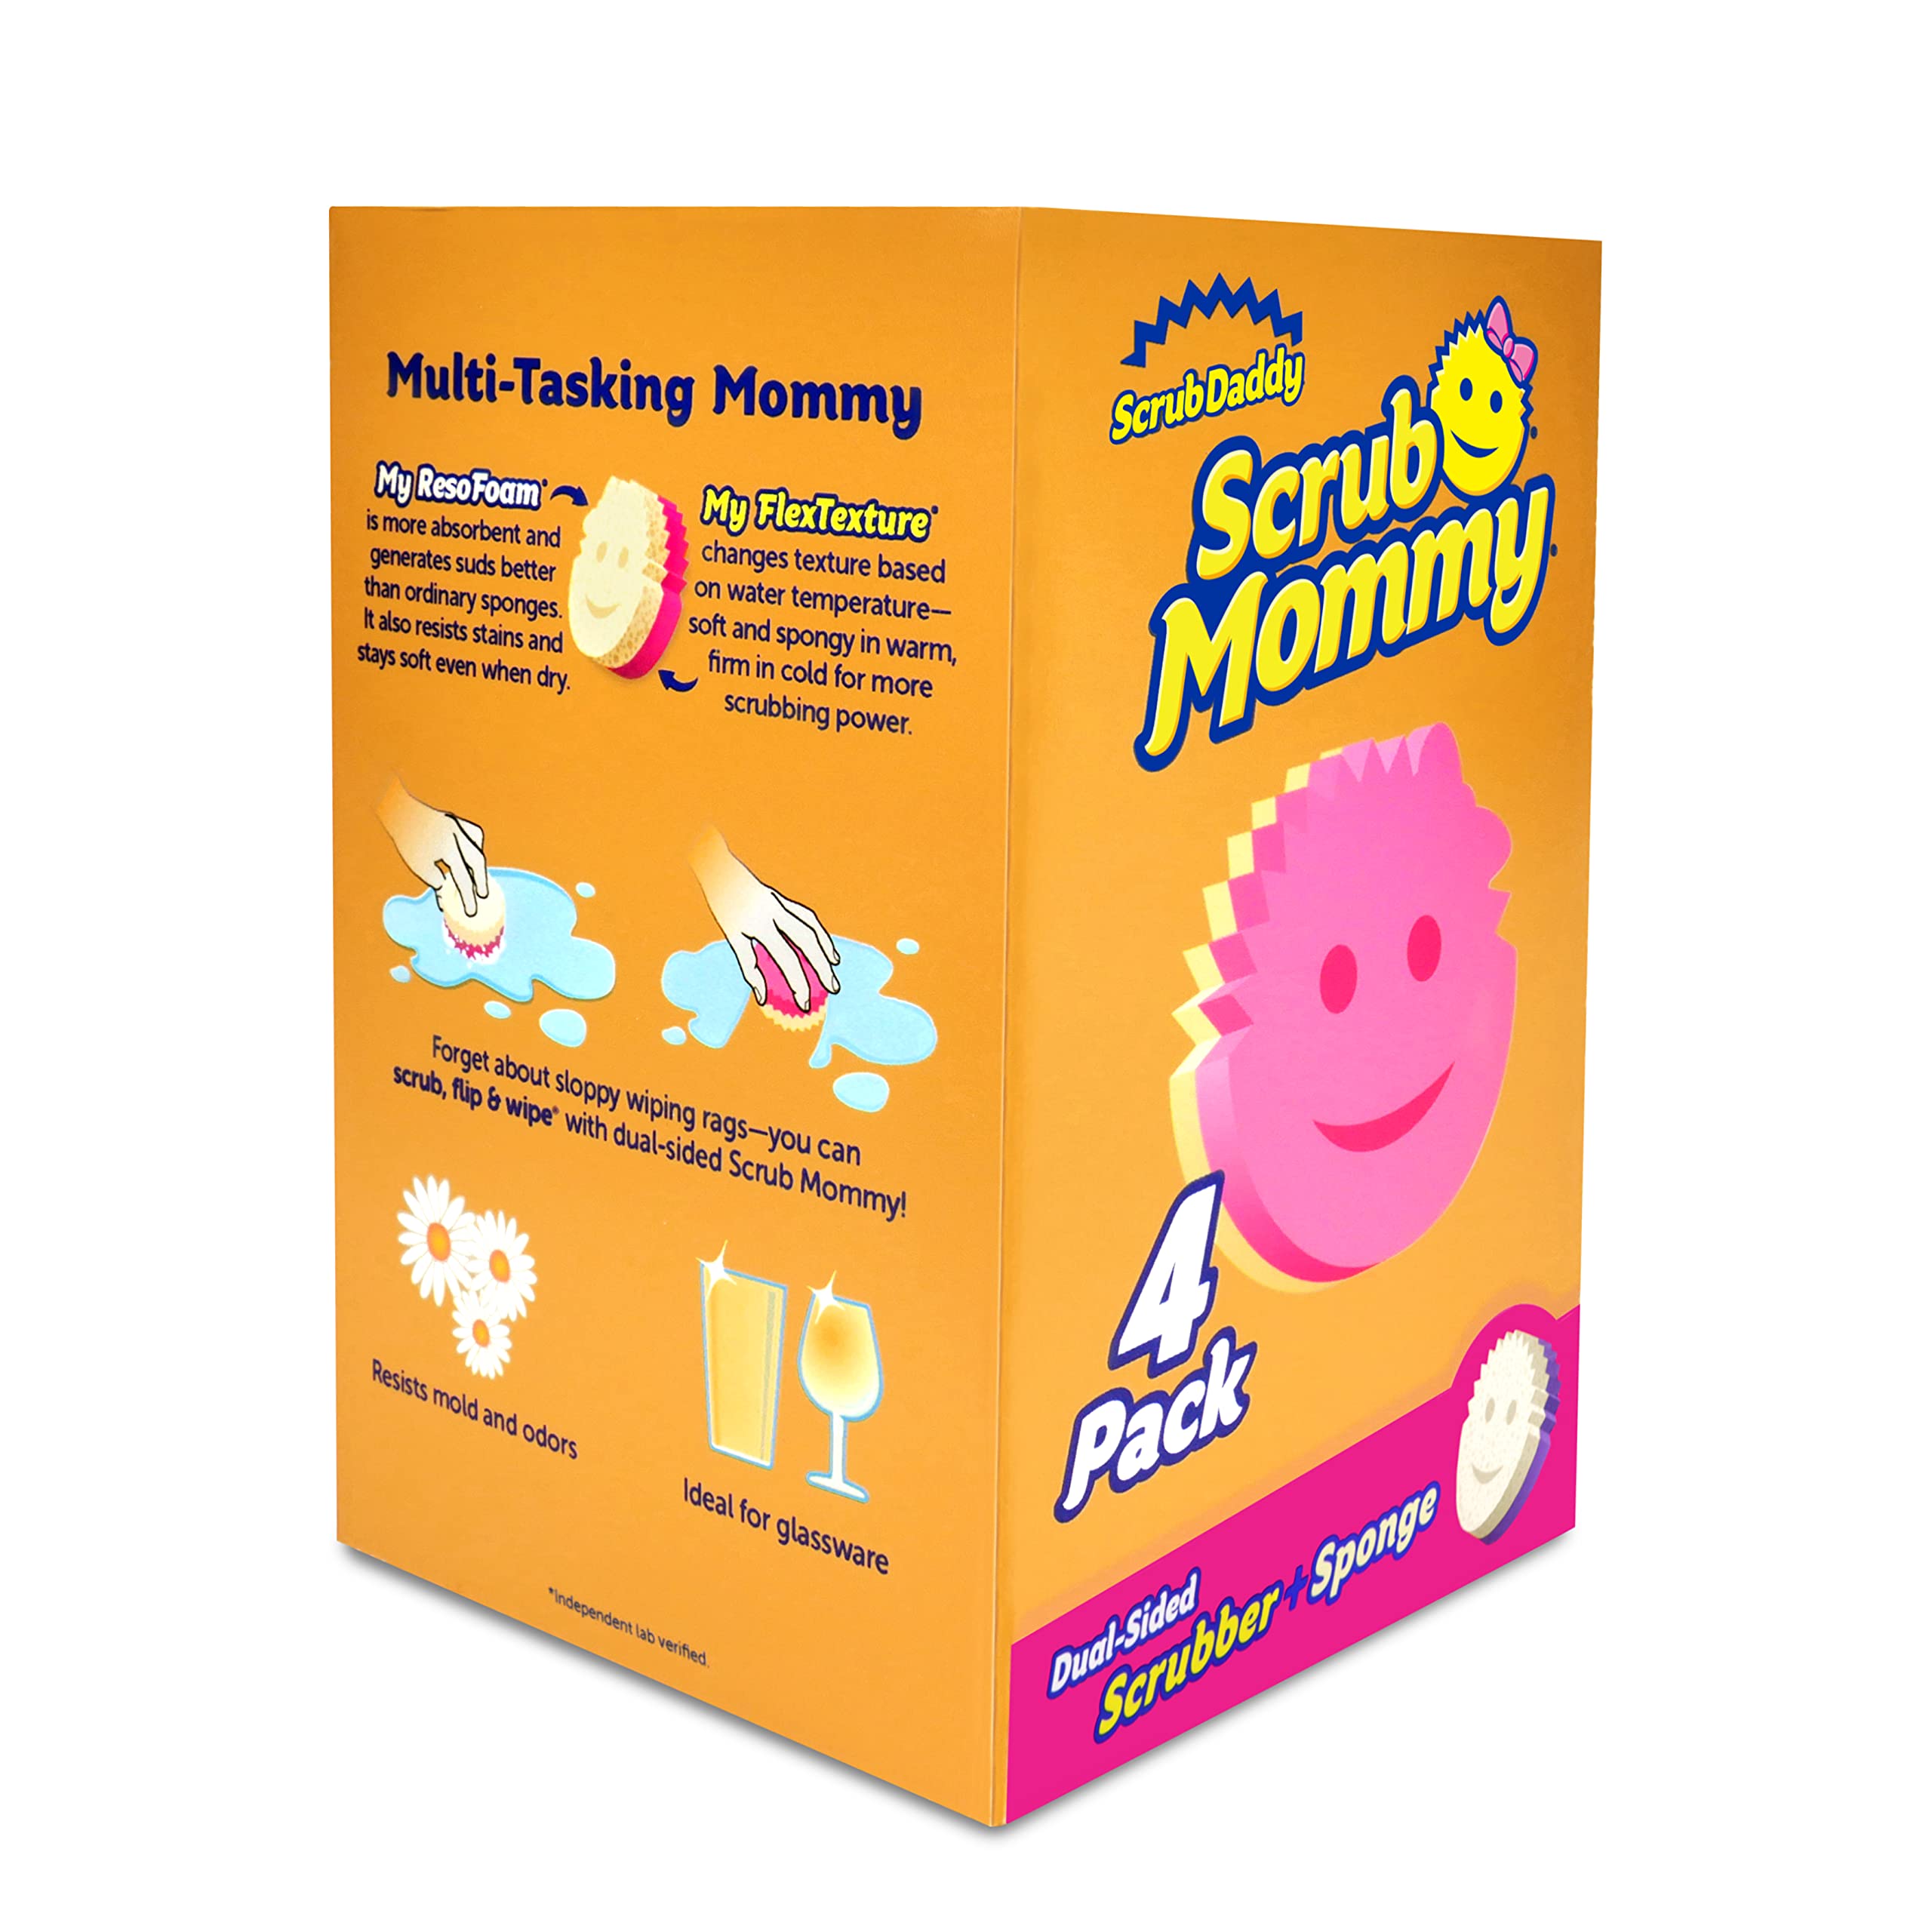 Scrub Daddy Scrub Mommy Dual Sided Scrubber Sponge • Price »